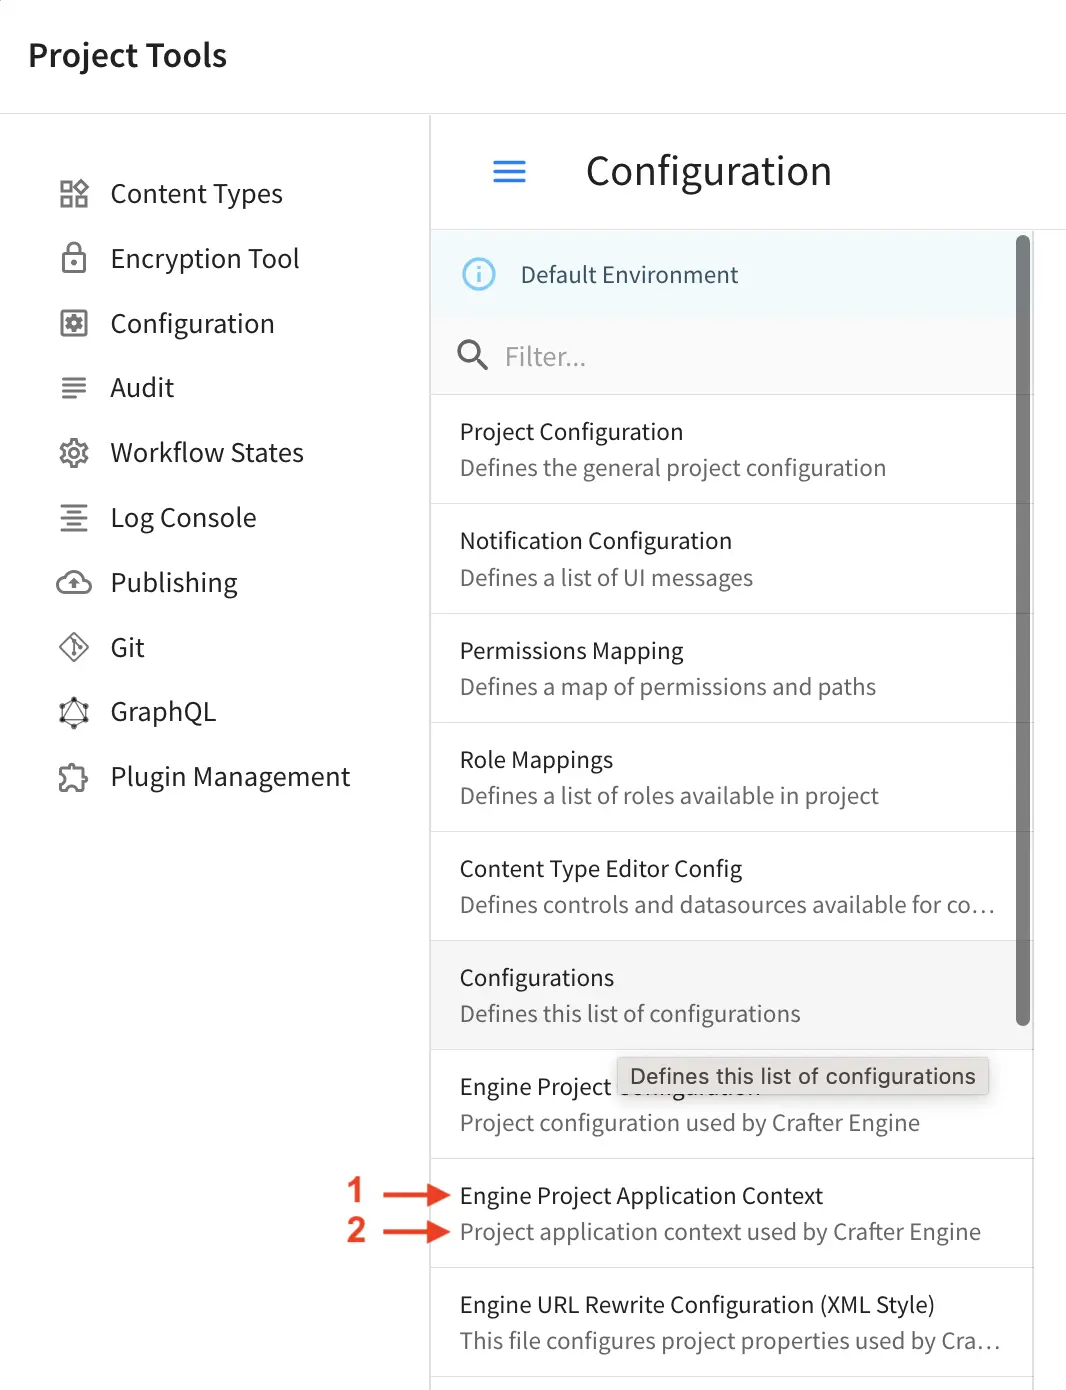 Configurations - Open Configurations